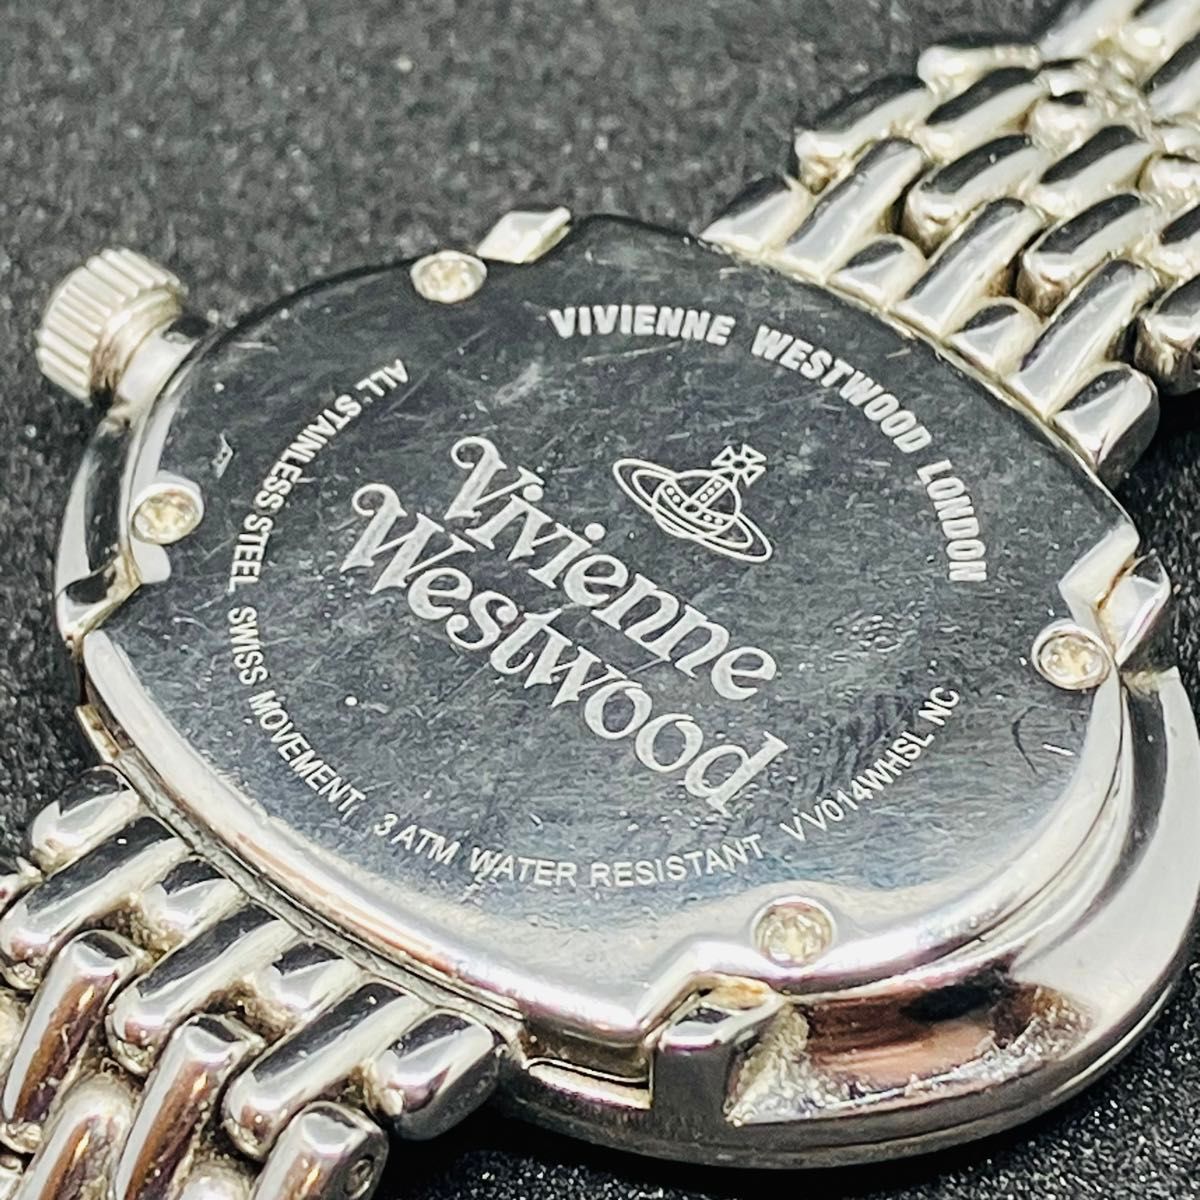 Vivienne Westwood ヴィヴィアンウエストウッド エリプス VV014WHSLレディース腕時計